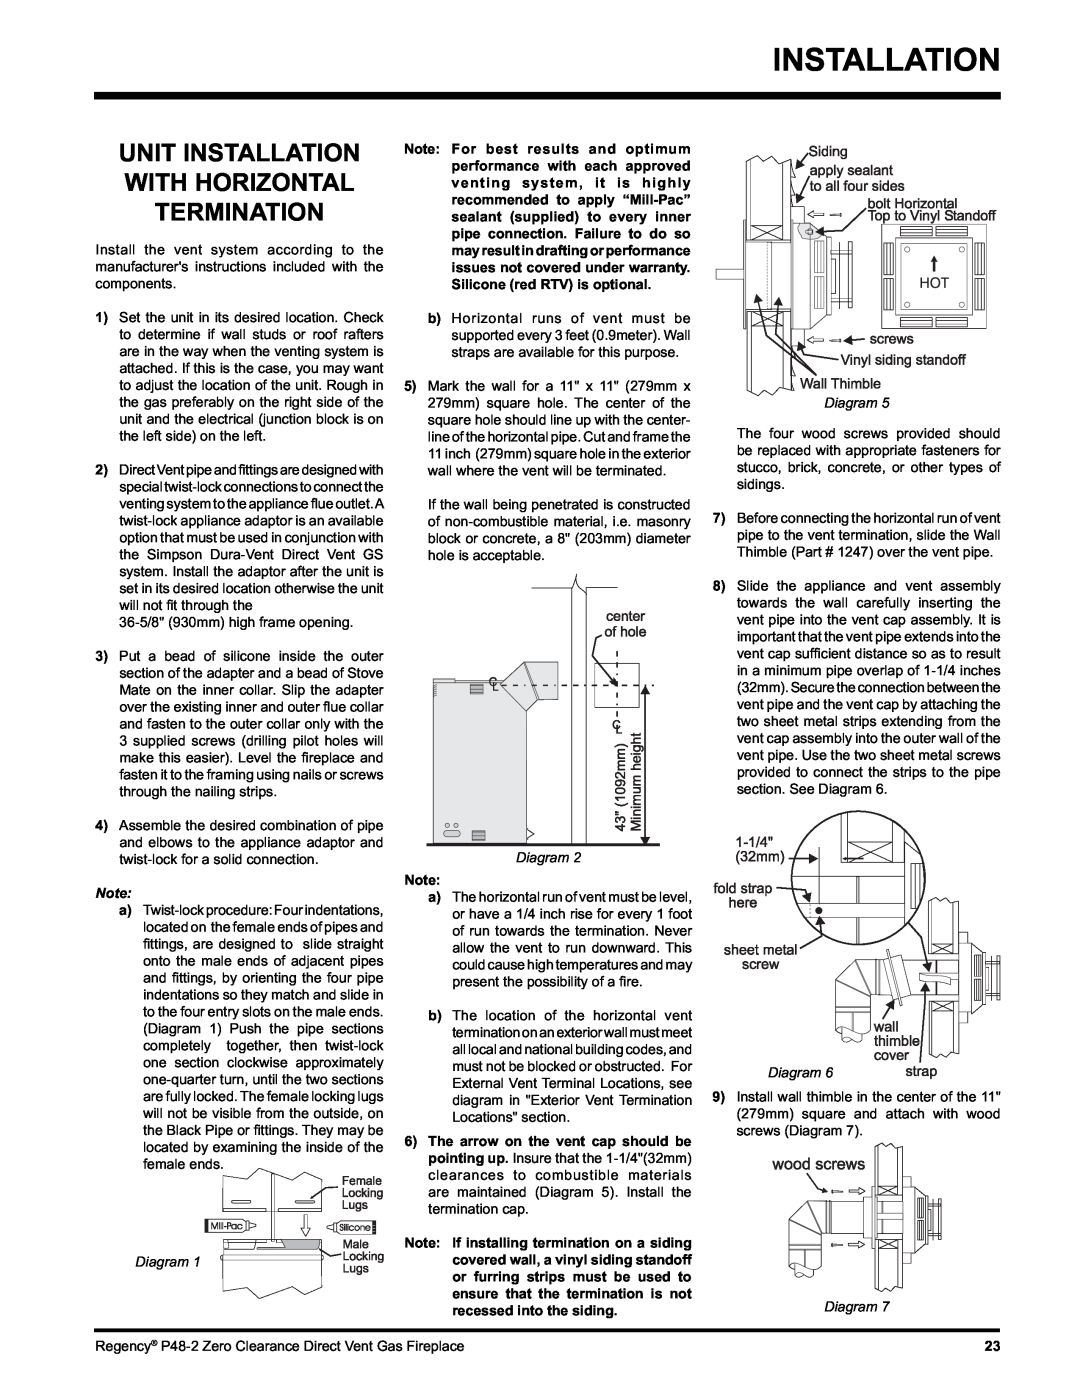 Regency P48-2 installation manual Unit Installation With Horizontal Termination, Diagram 